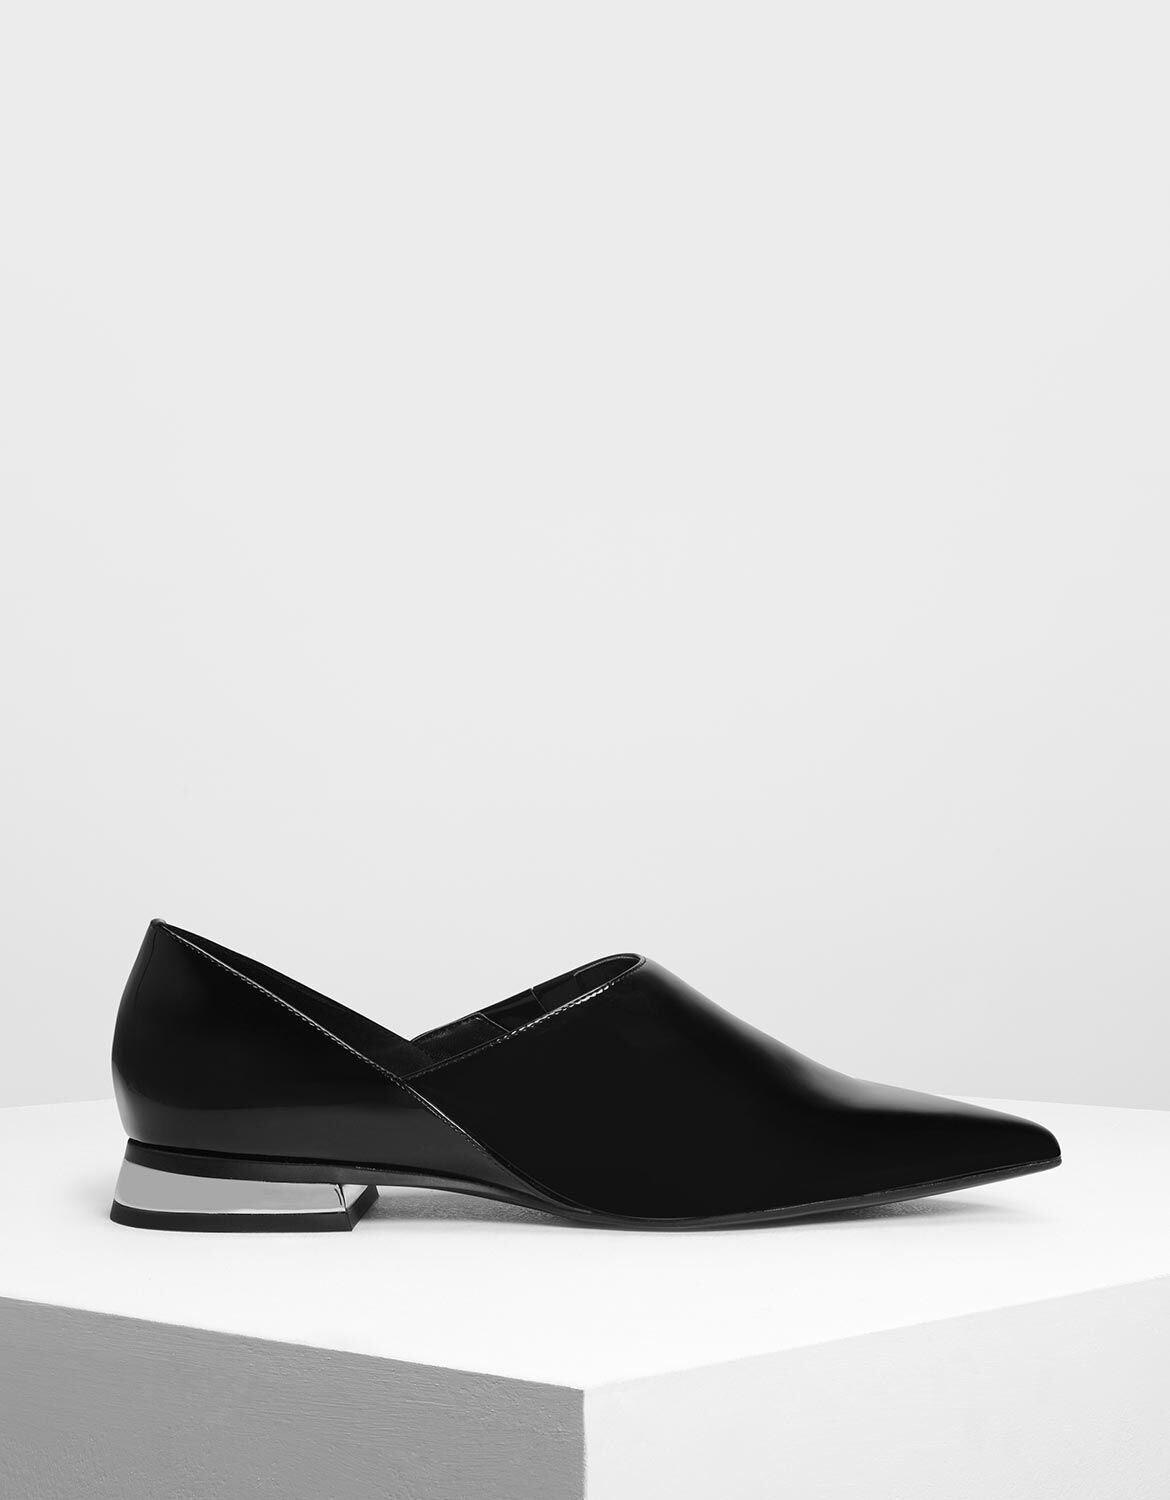 Black Pointed Toe Slip On Flat Shoes 